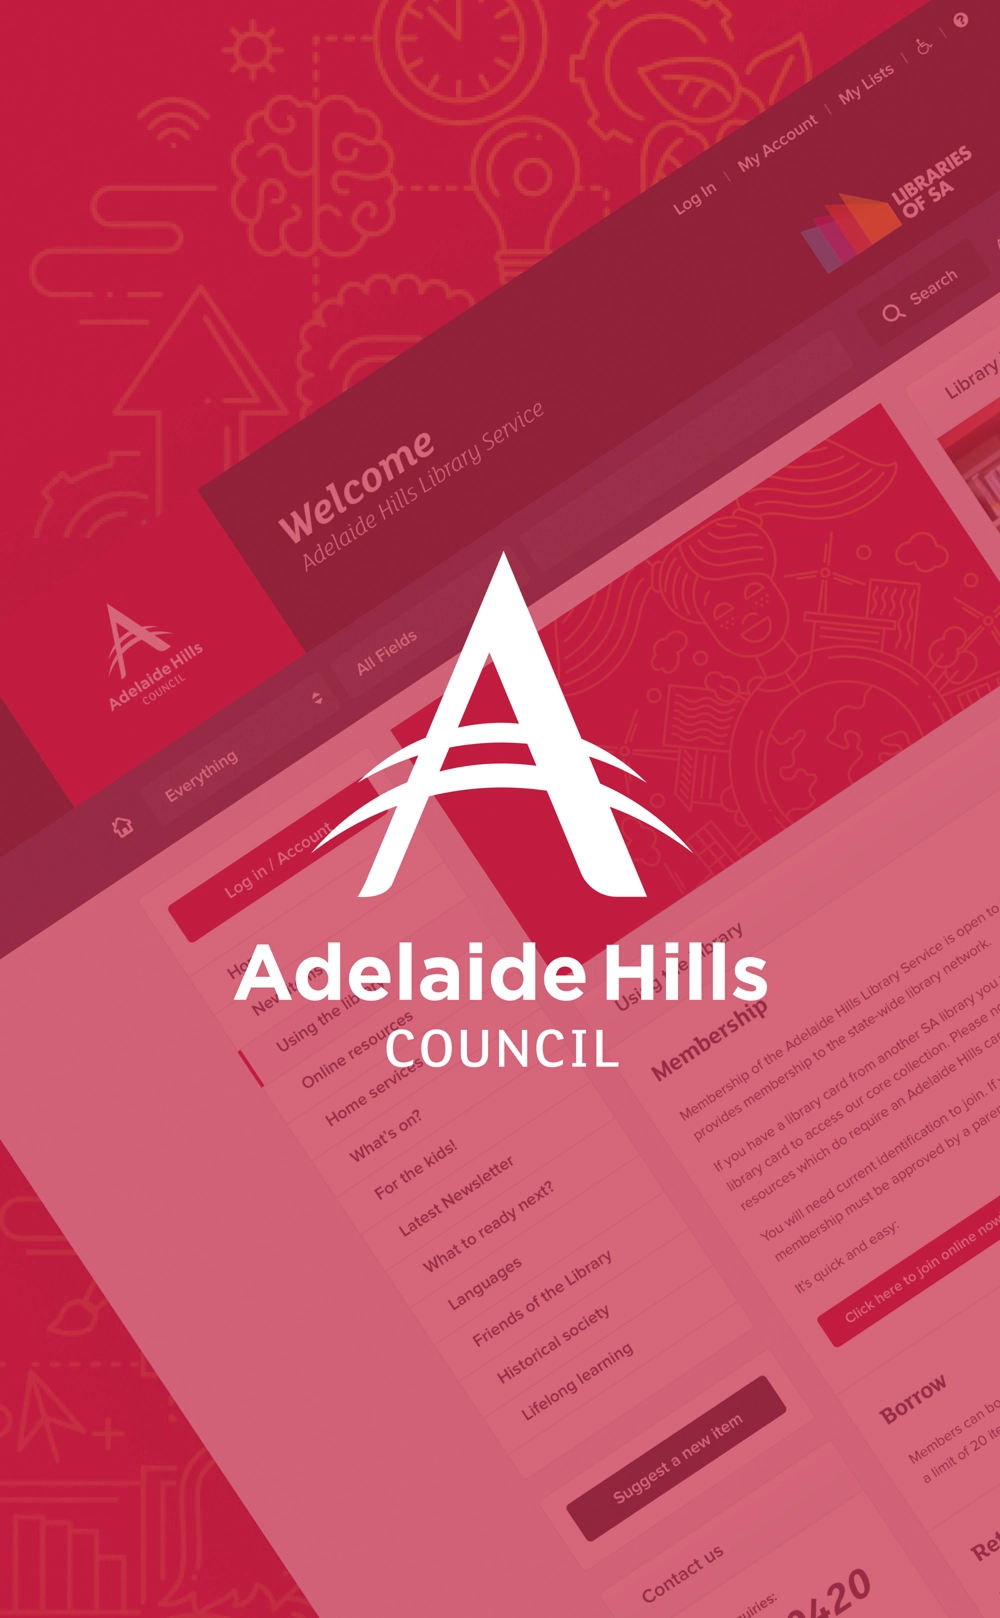 Adelaide Hills Council Library / Yo Francisco Martinez